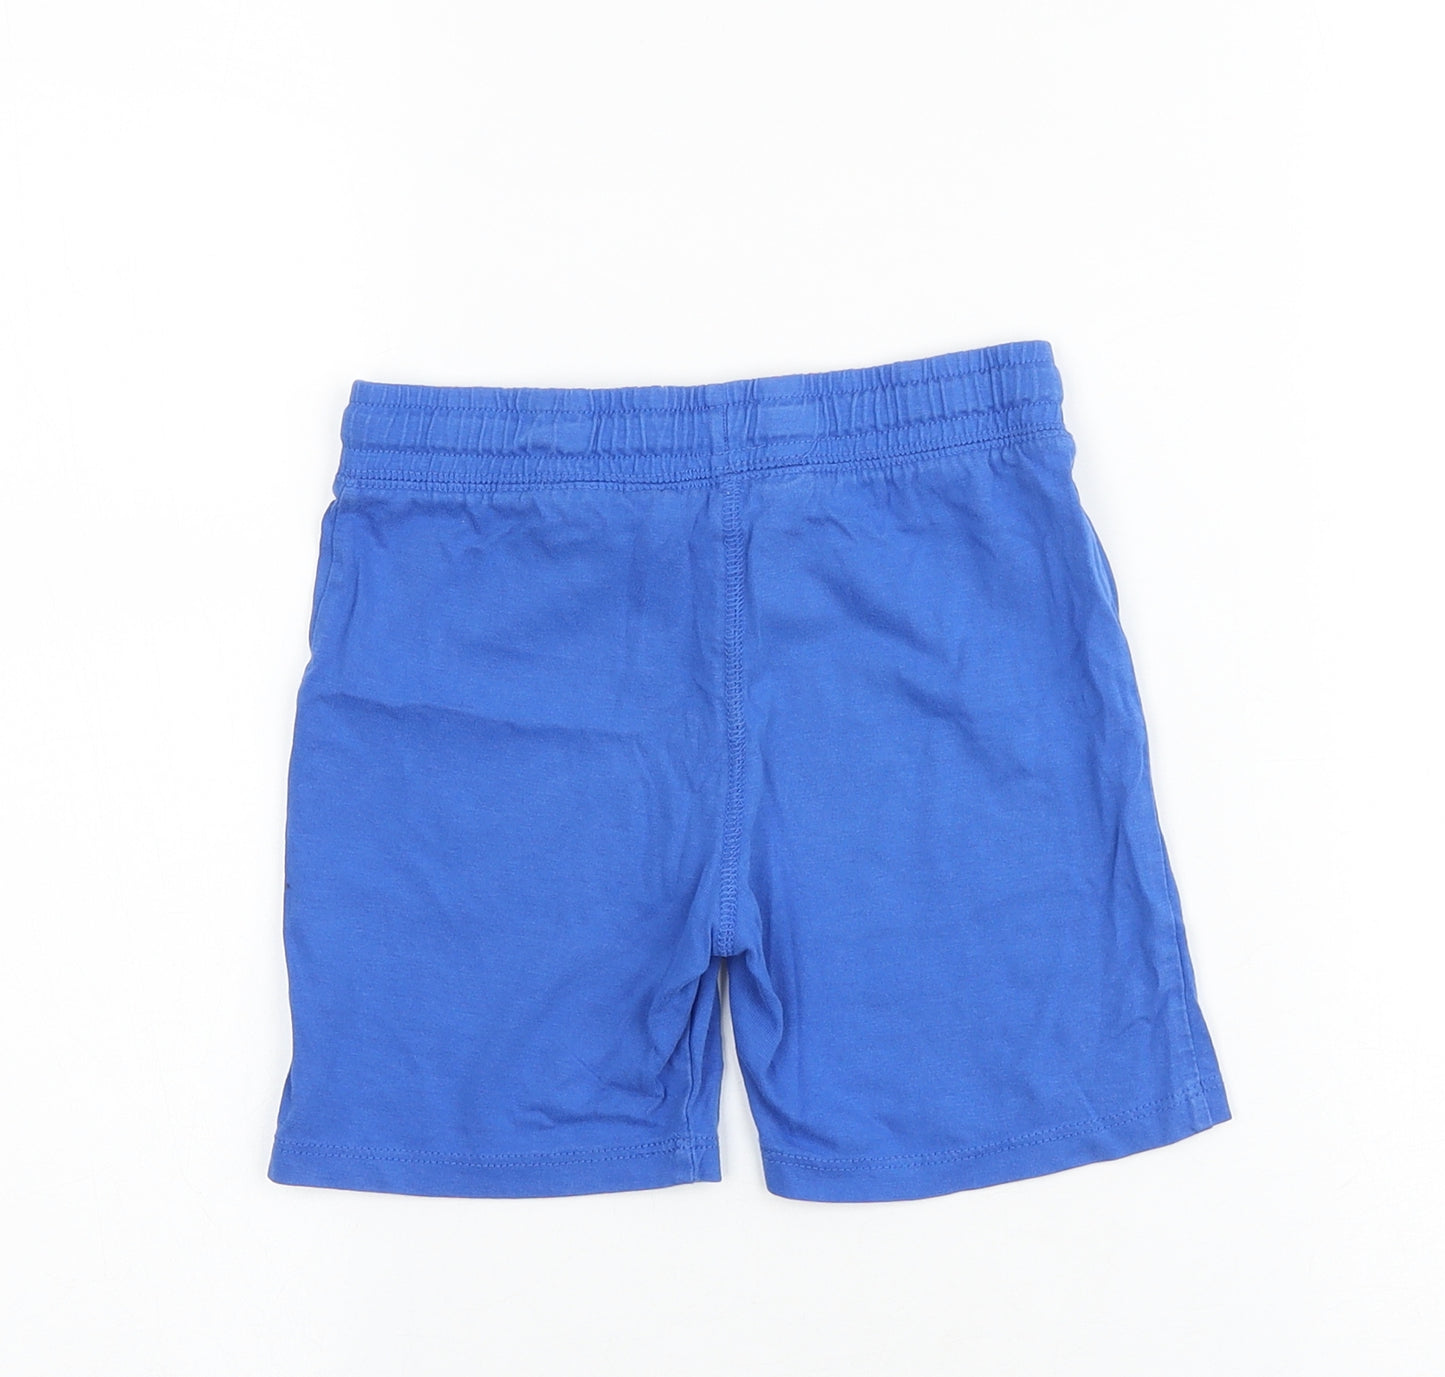 H&M Boys Blue 100% Cotton Sweat Shorts Size 3-4 Years Regular